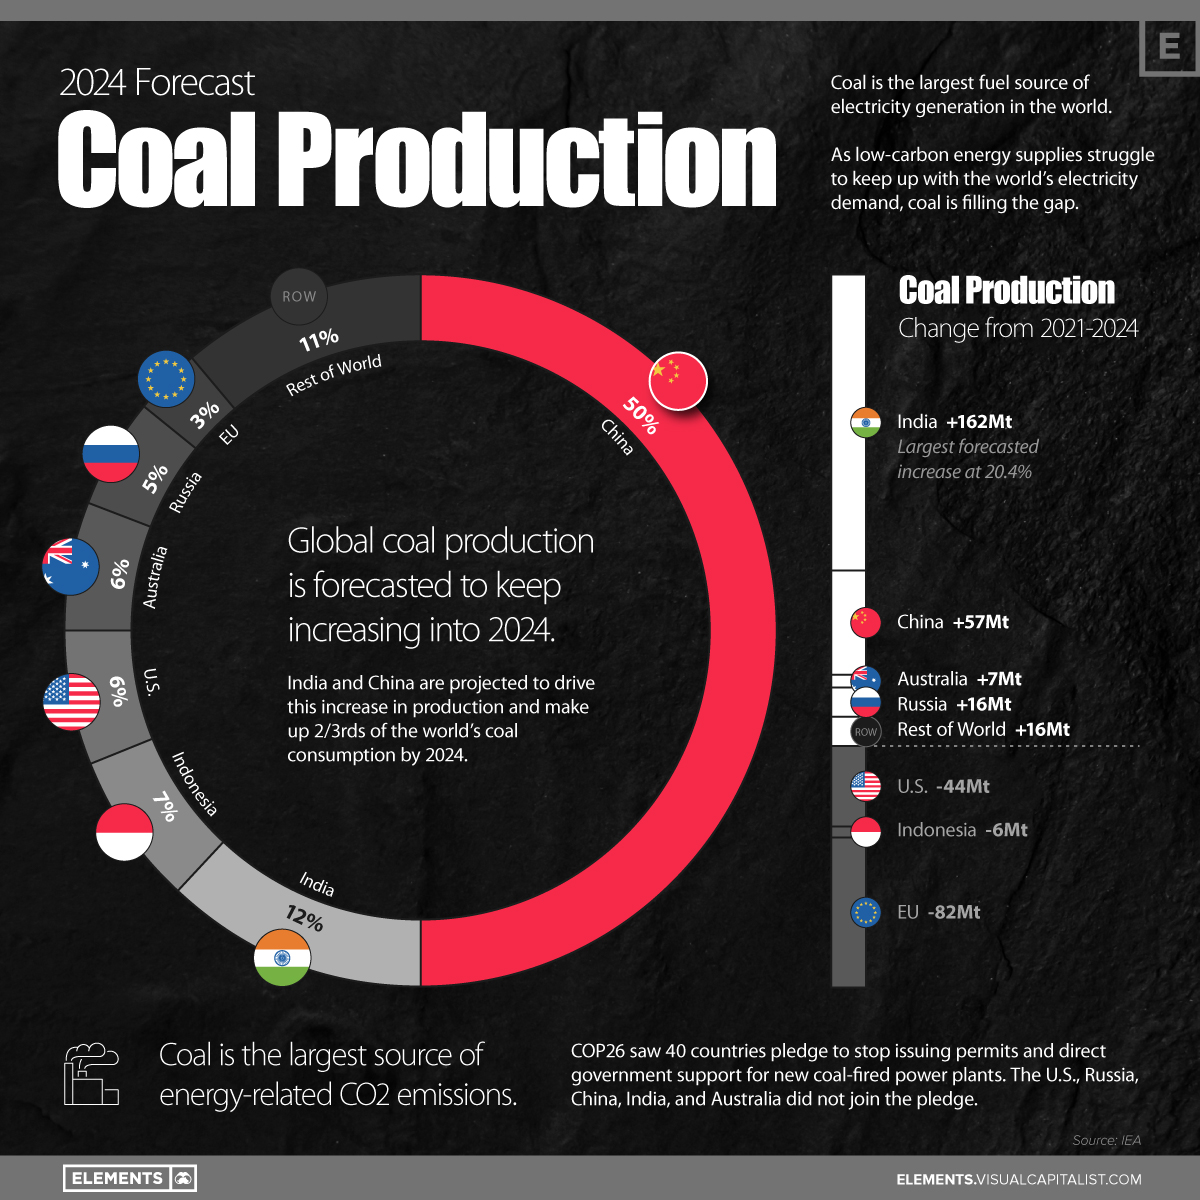 The Future of Global Coal Production (2021-2024F)